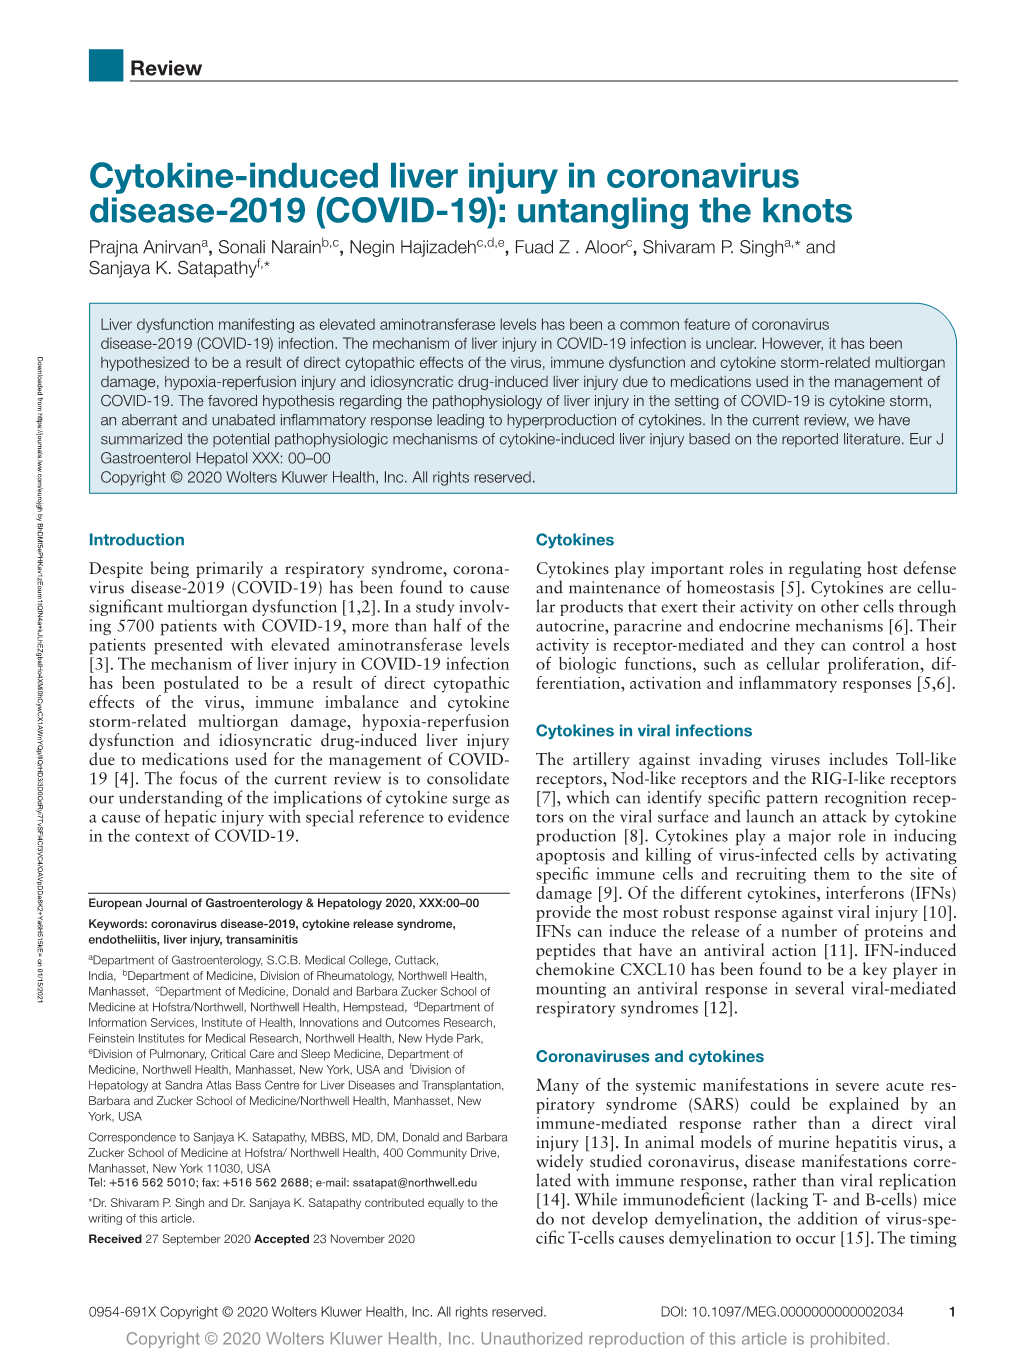 Cytokine-Induced Liver Injury in Coronavirus